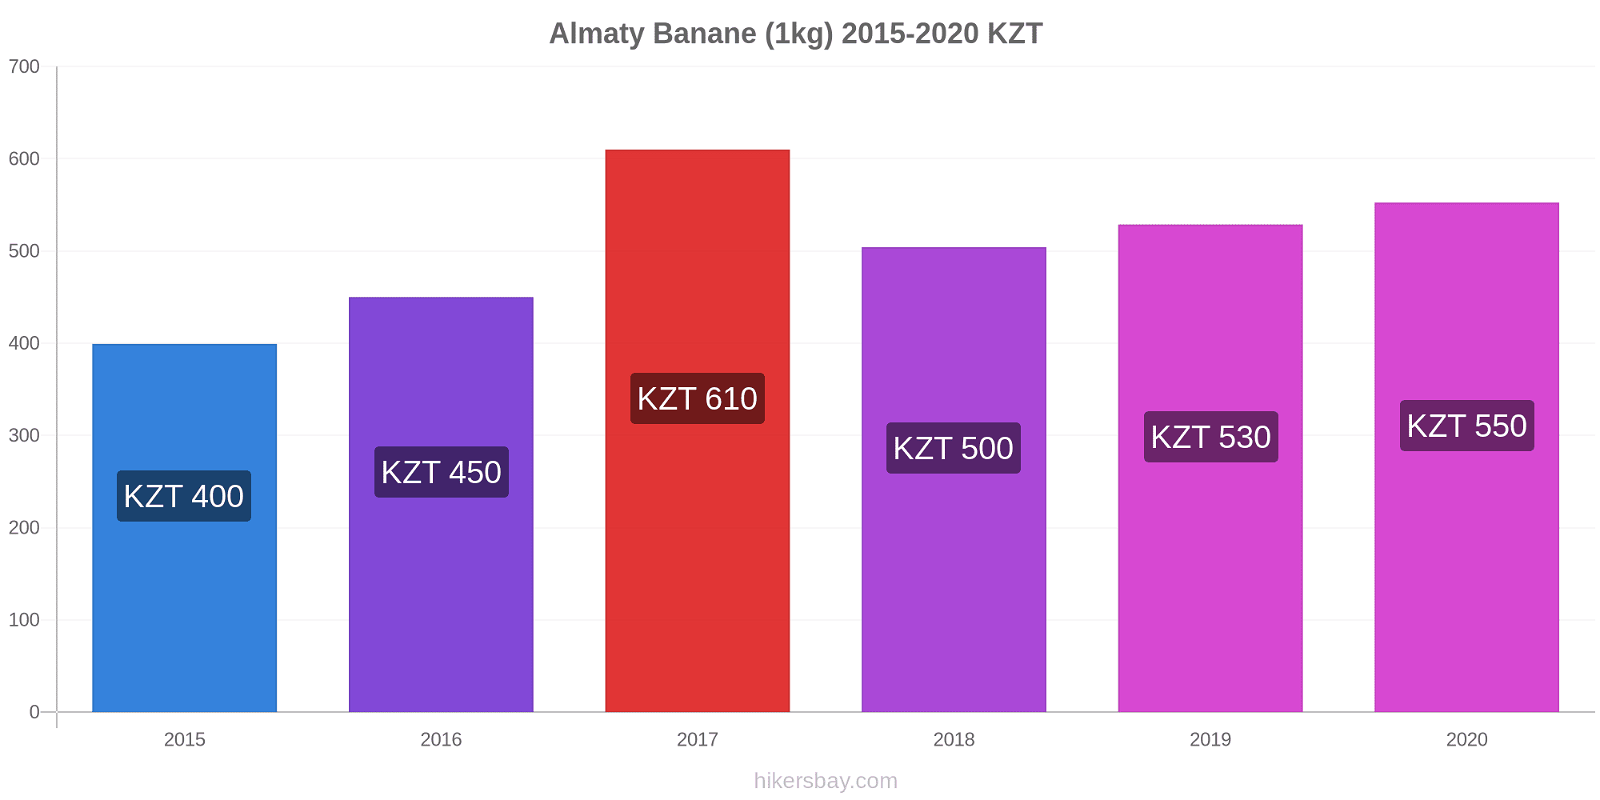 Almaty variazioni di prezzo Banana (1kg) hikersbay.com